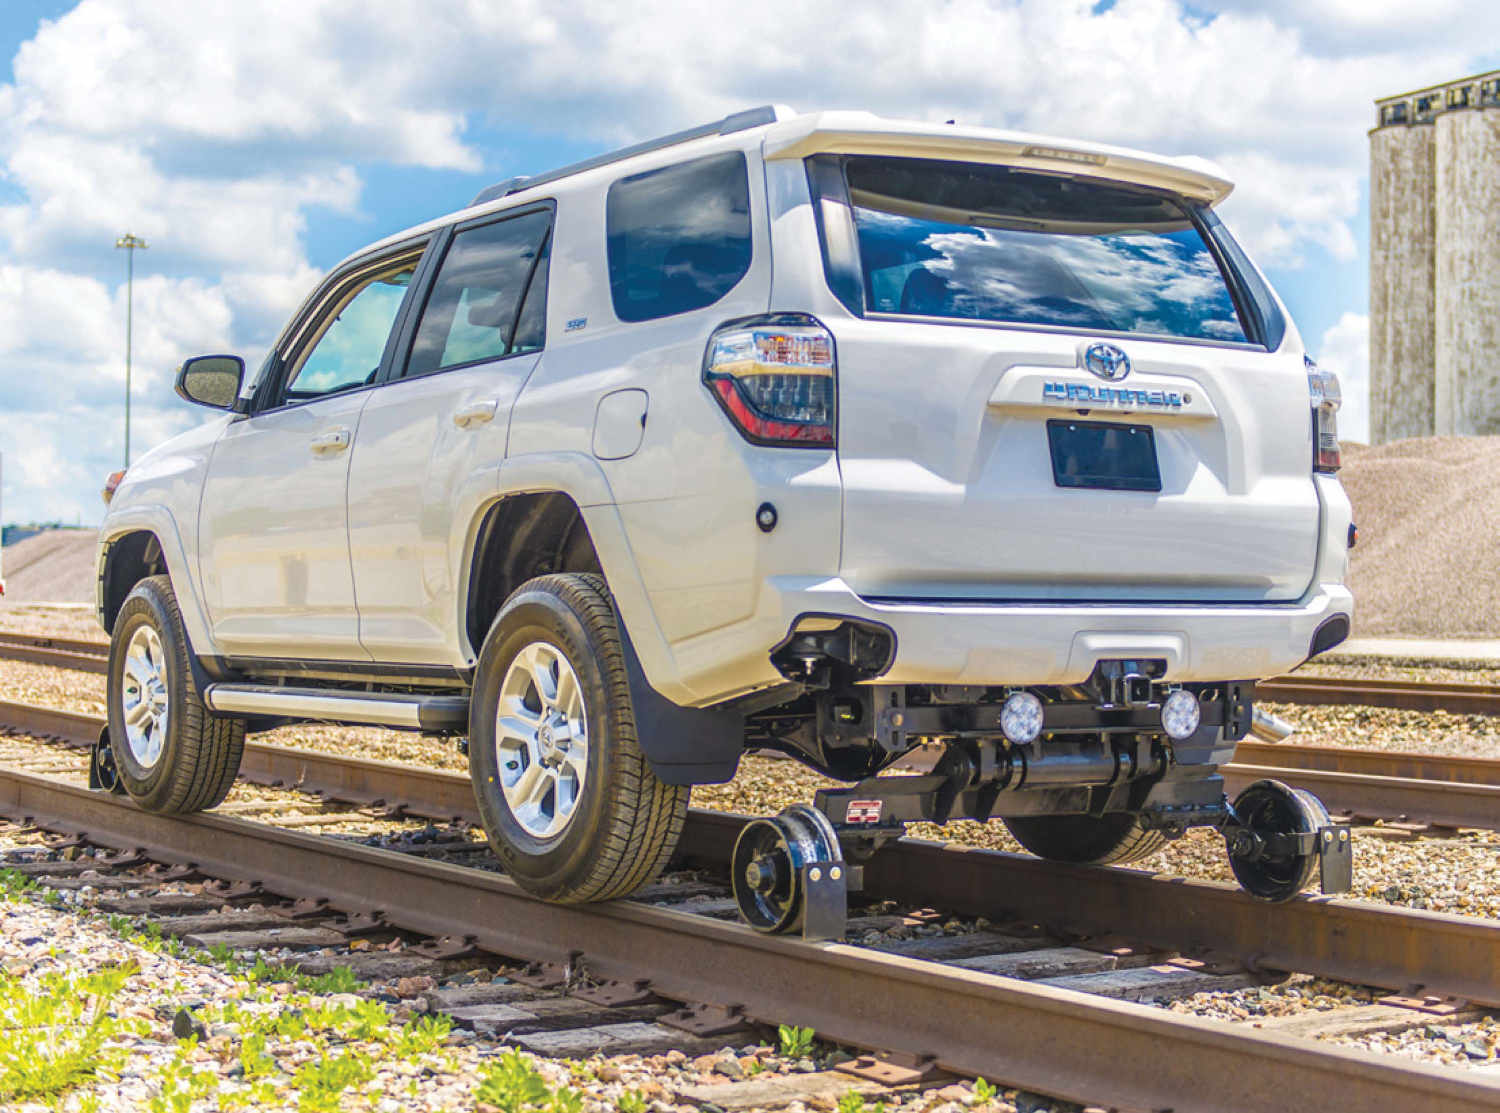 This Toyota 4Runner Hi-Rail can ride on train tracks